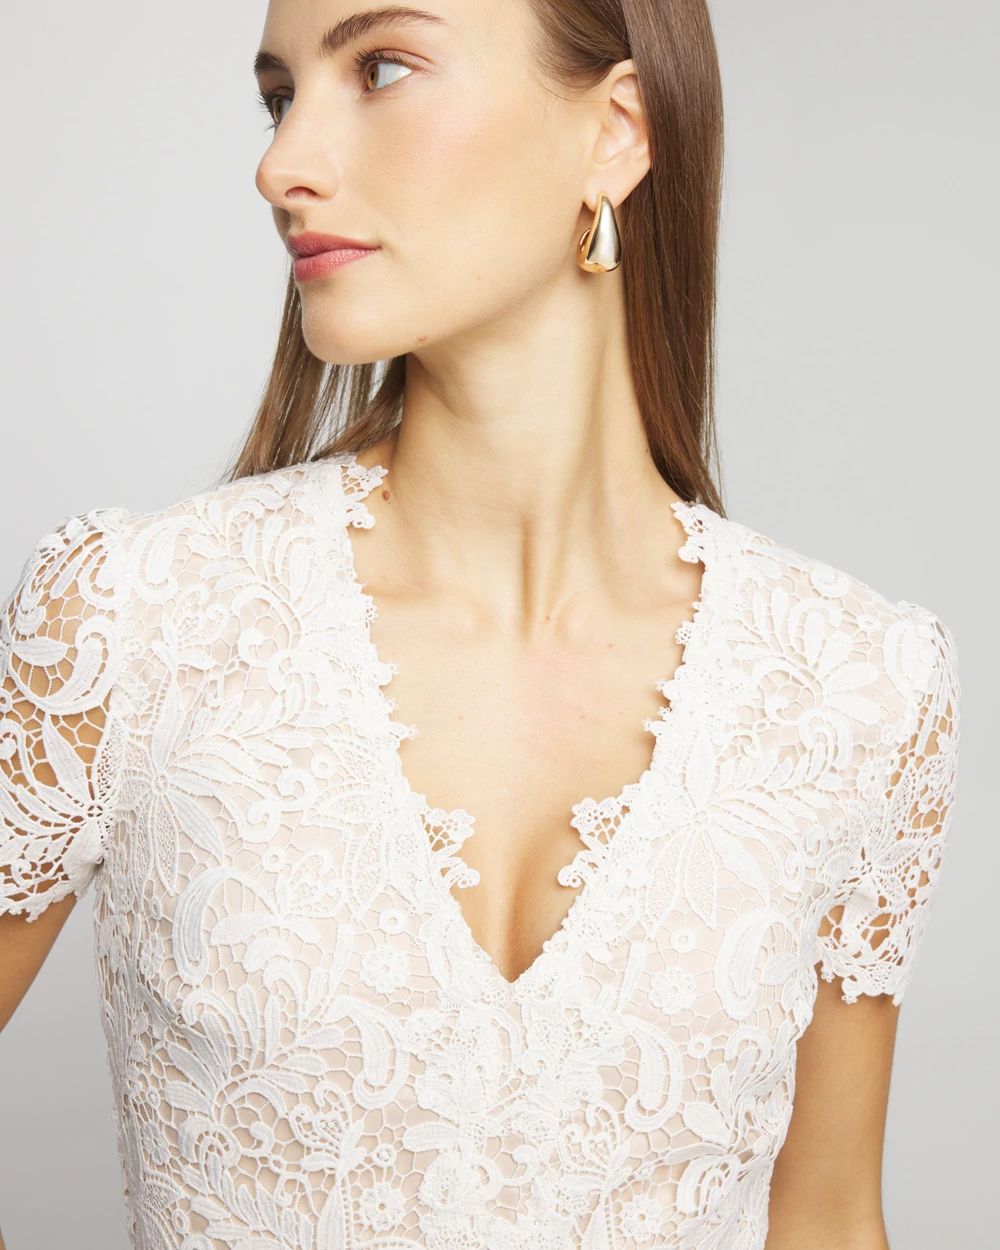 Petite Short Sleeve V-Neck Lace Sheath Dress click to view larger image.